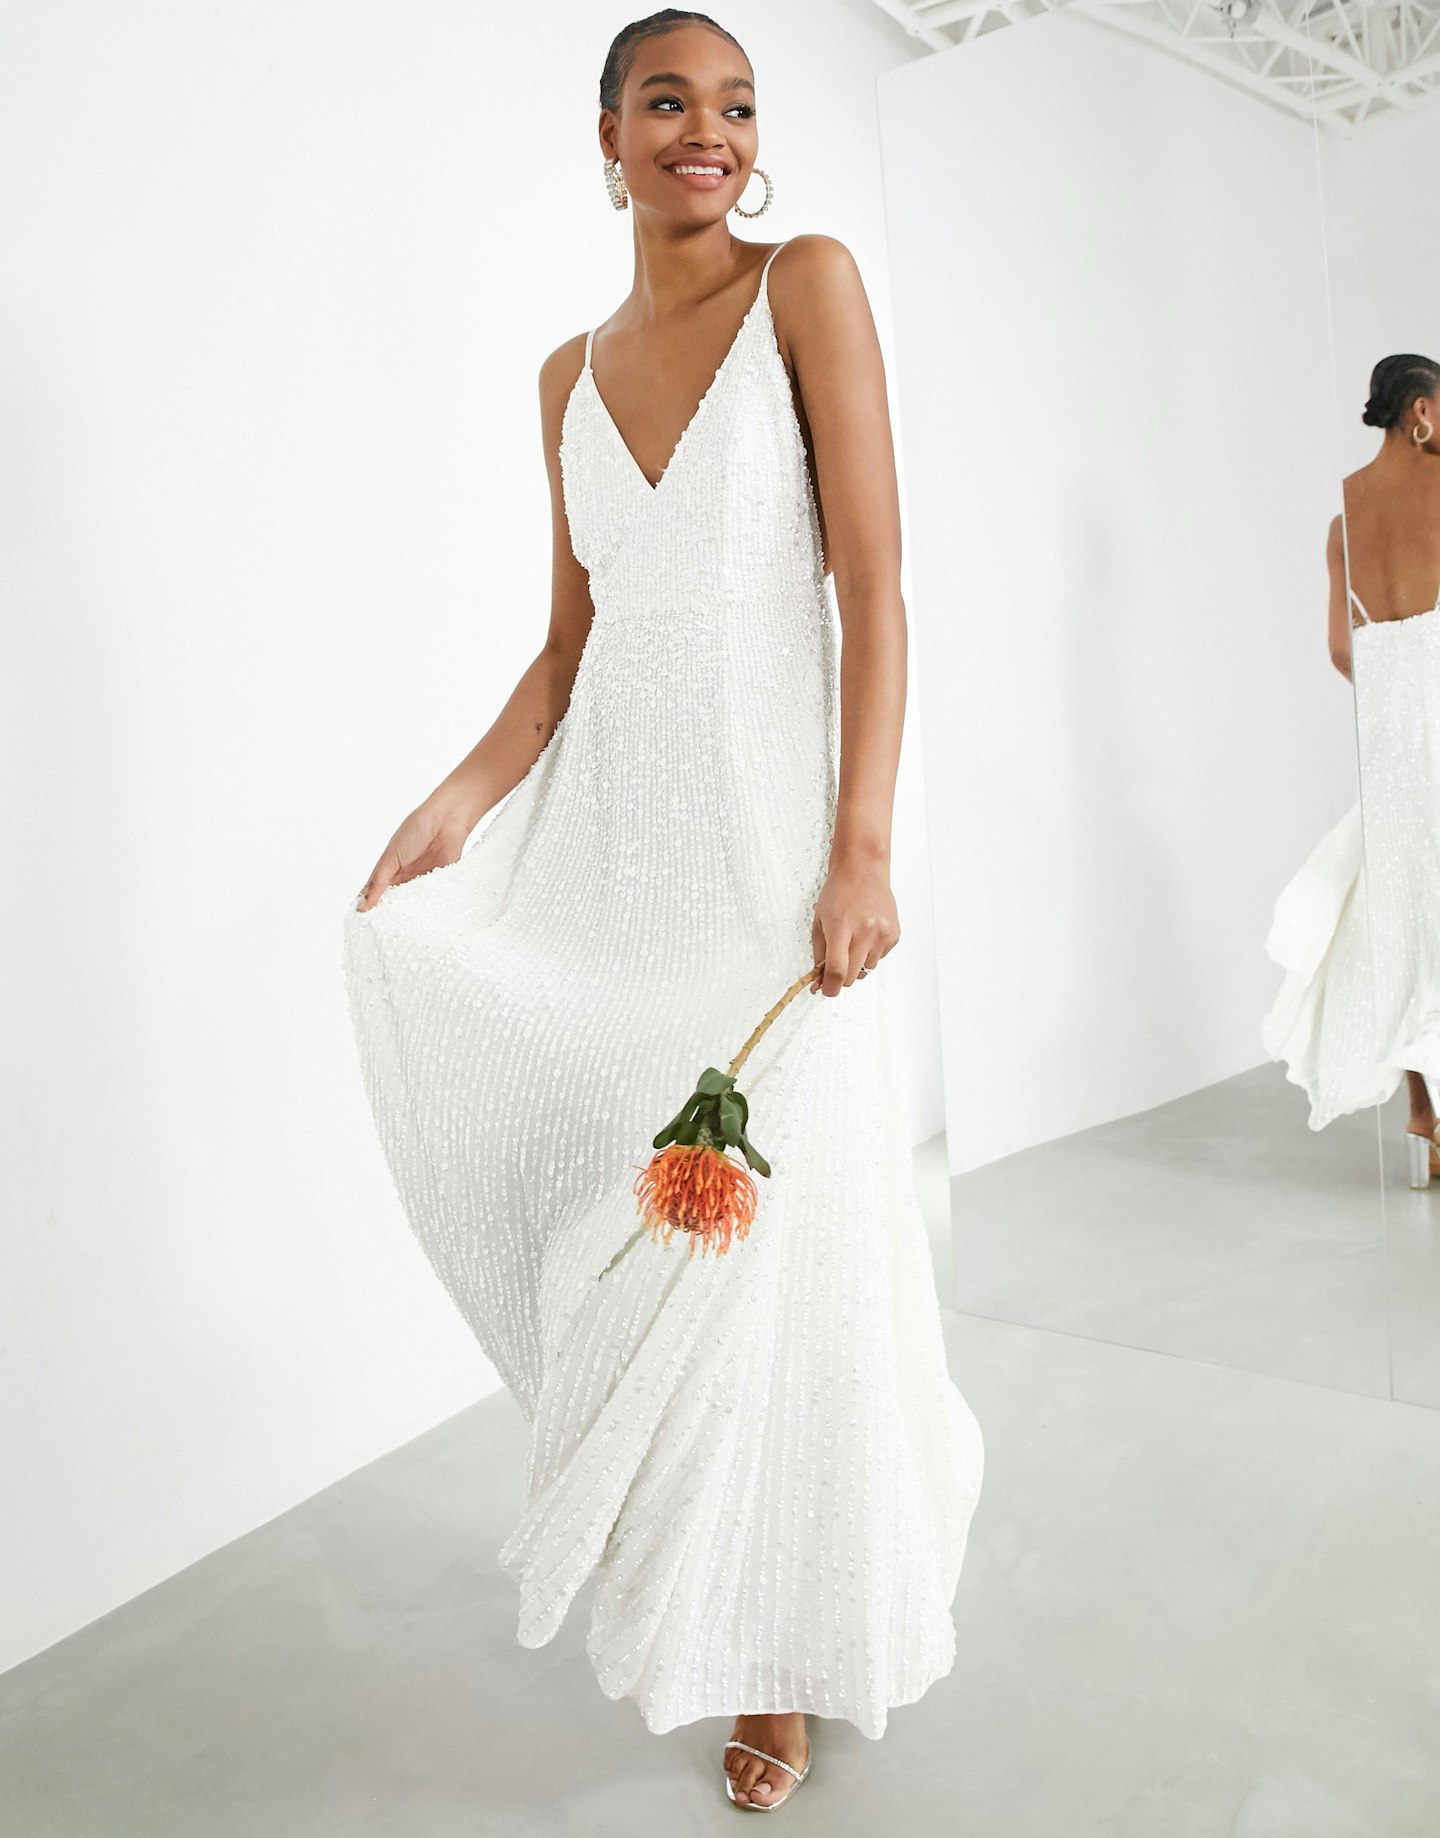 ASOS EDITION Josie Sequin Cami Wedding Dress